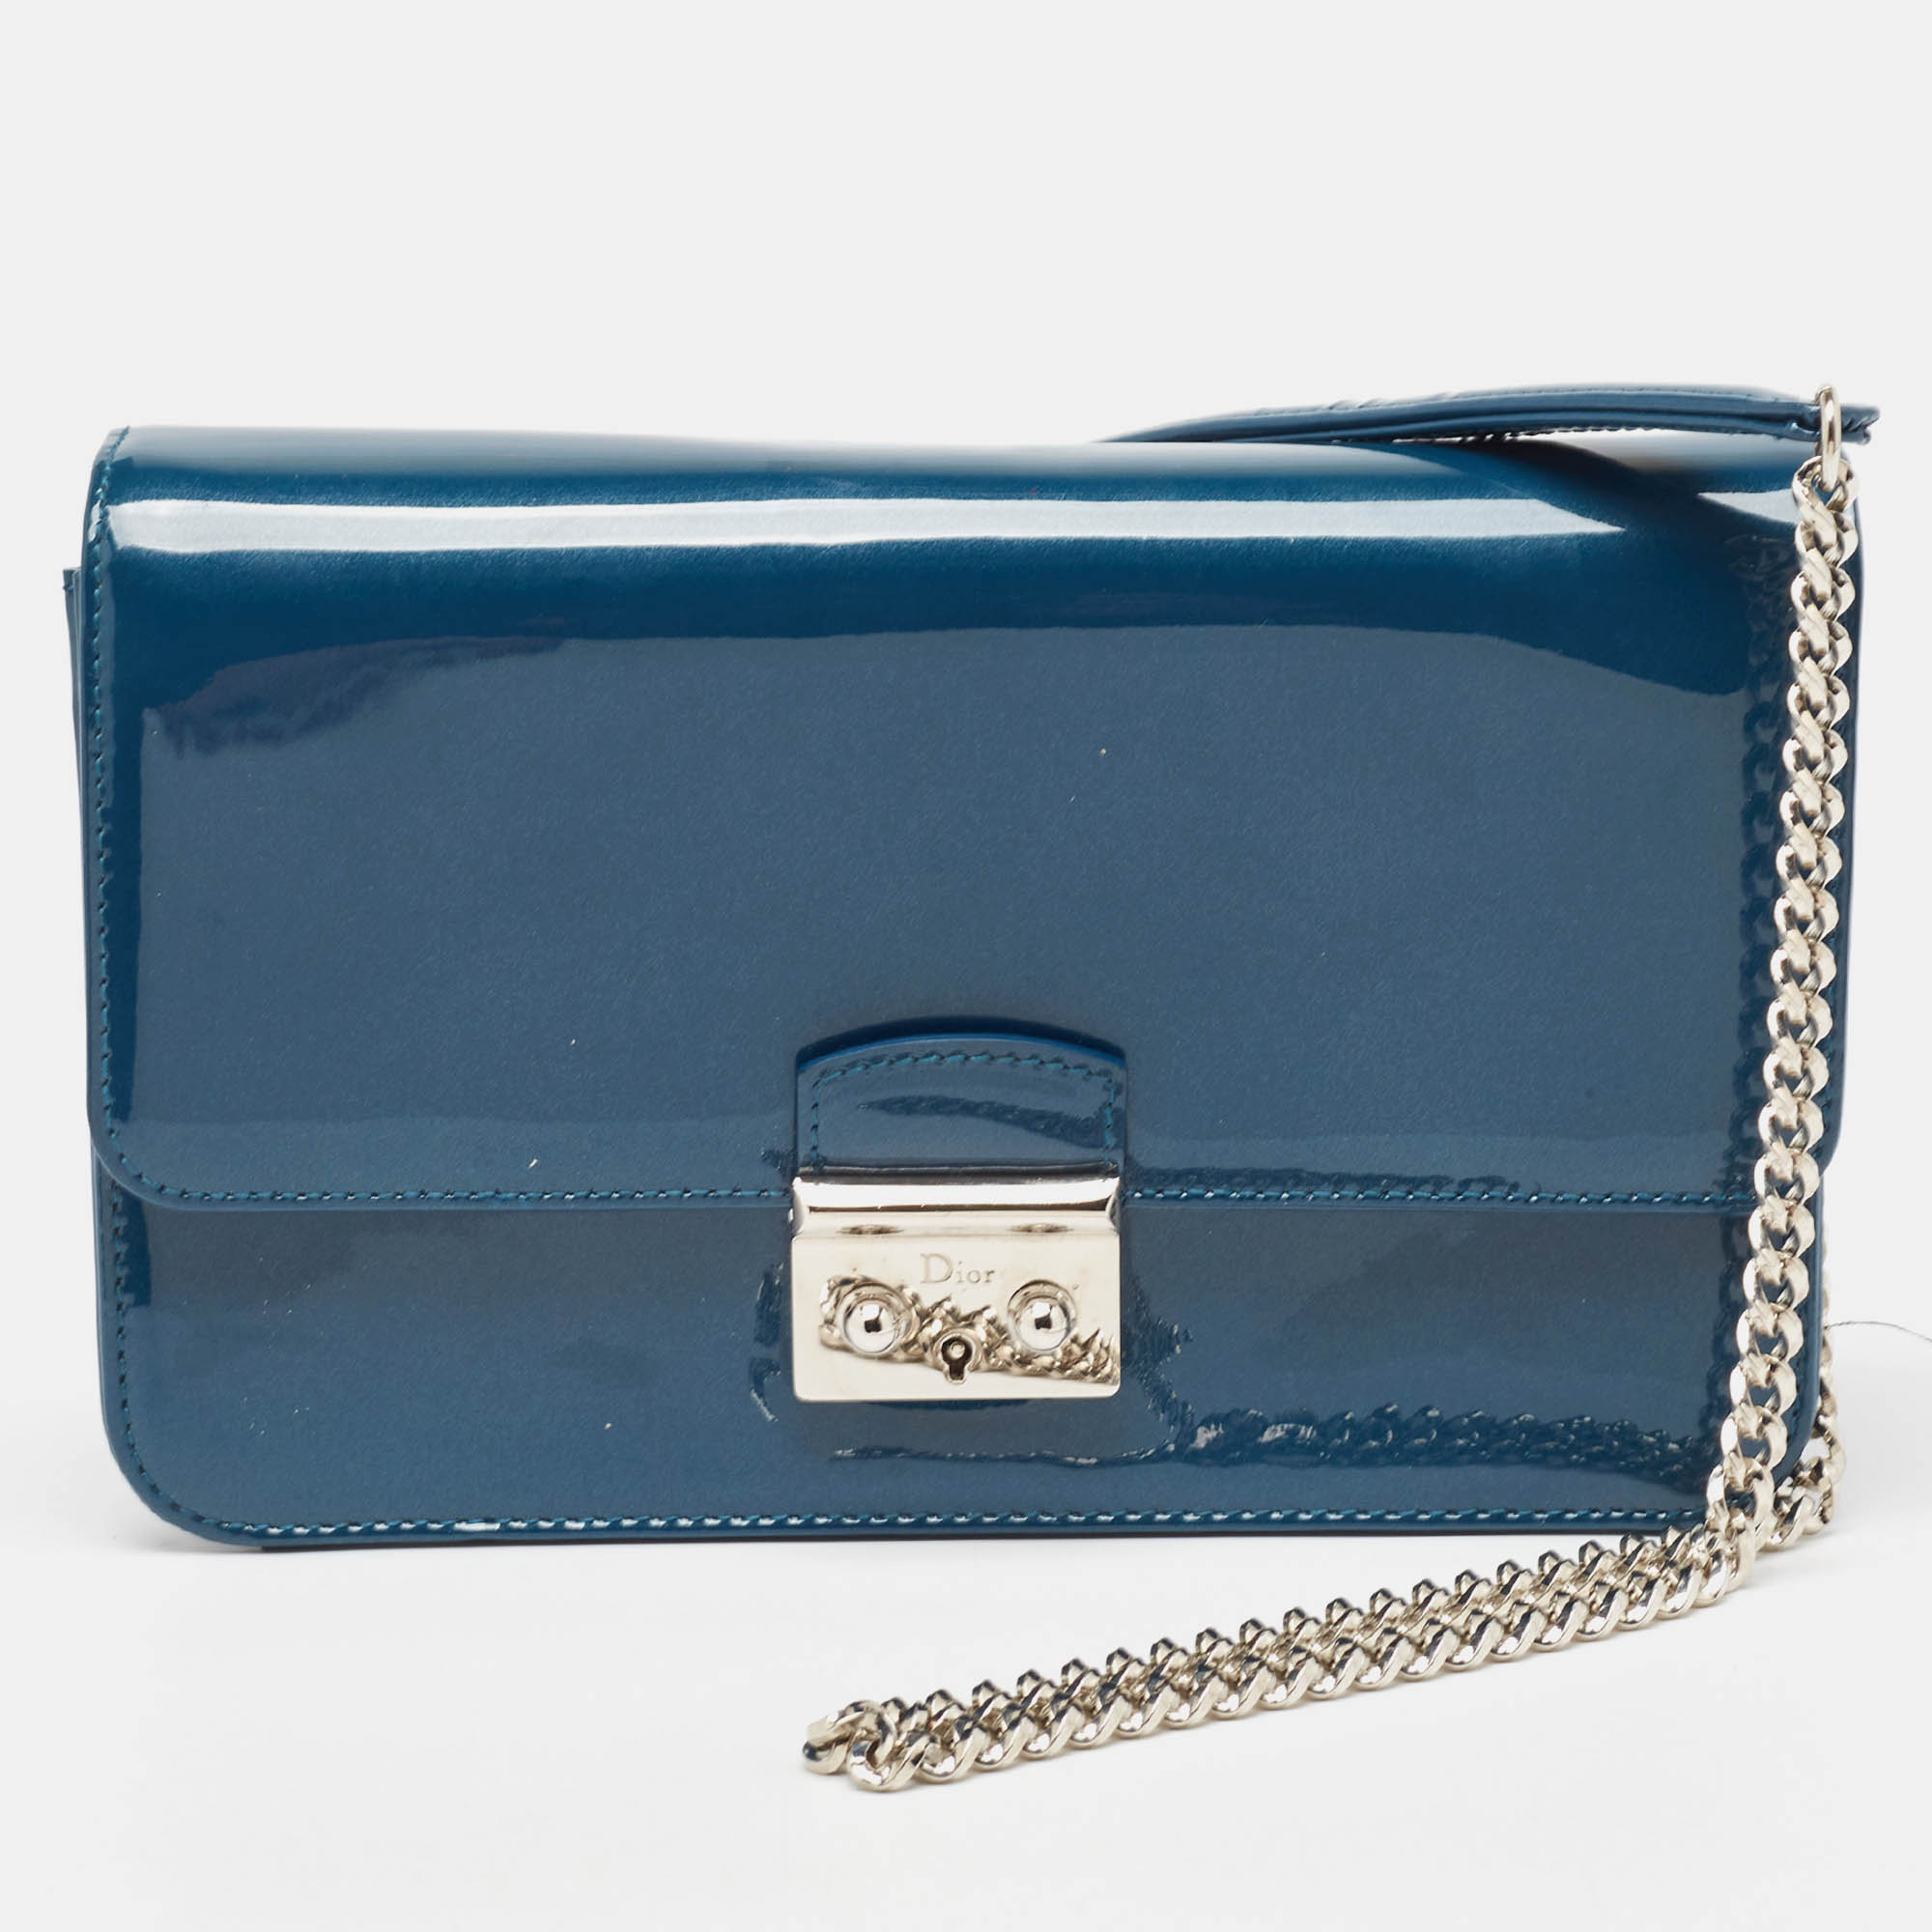 Dior dark blue patent leather miss dior promenade wallet on chain